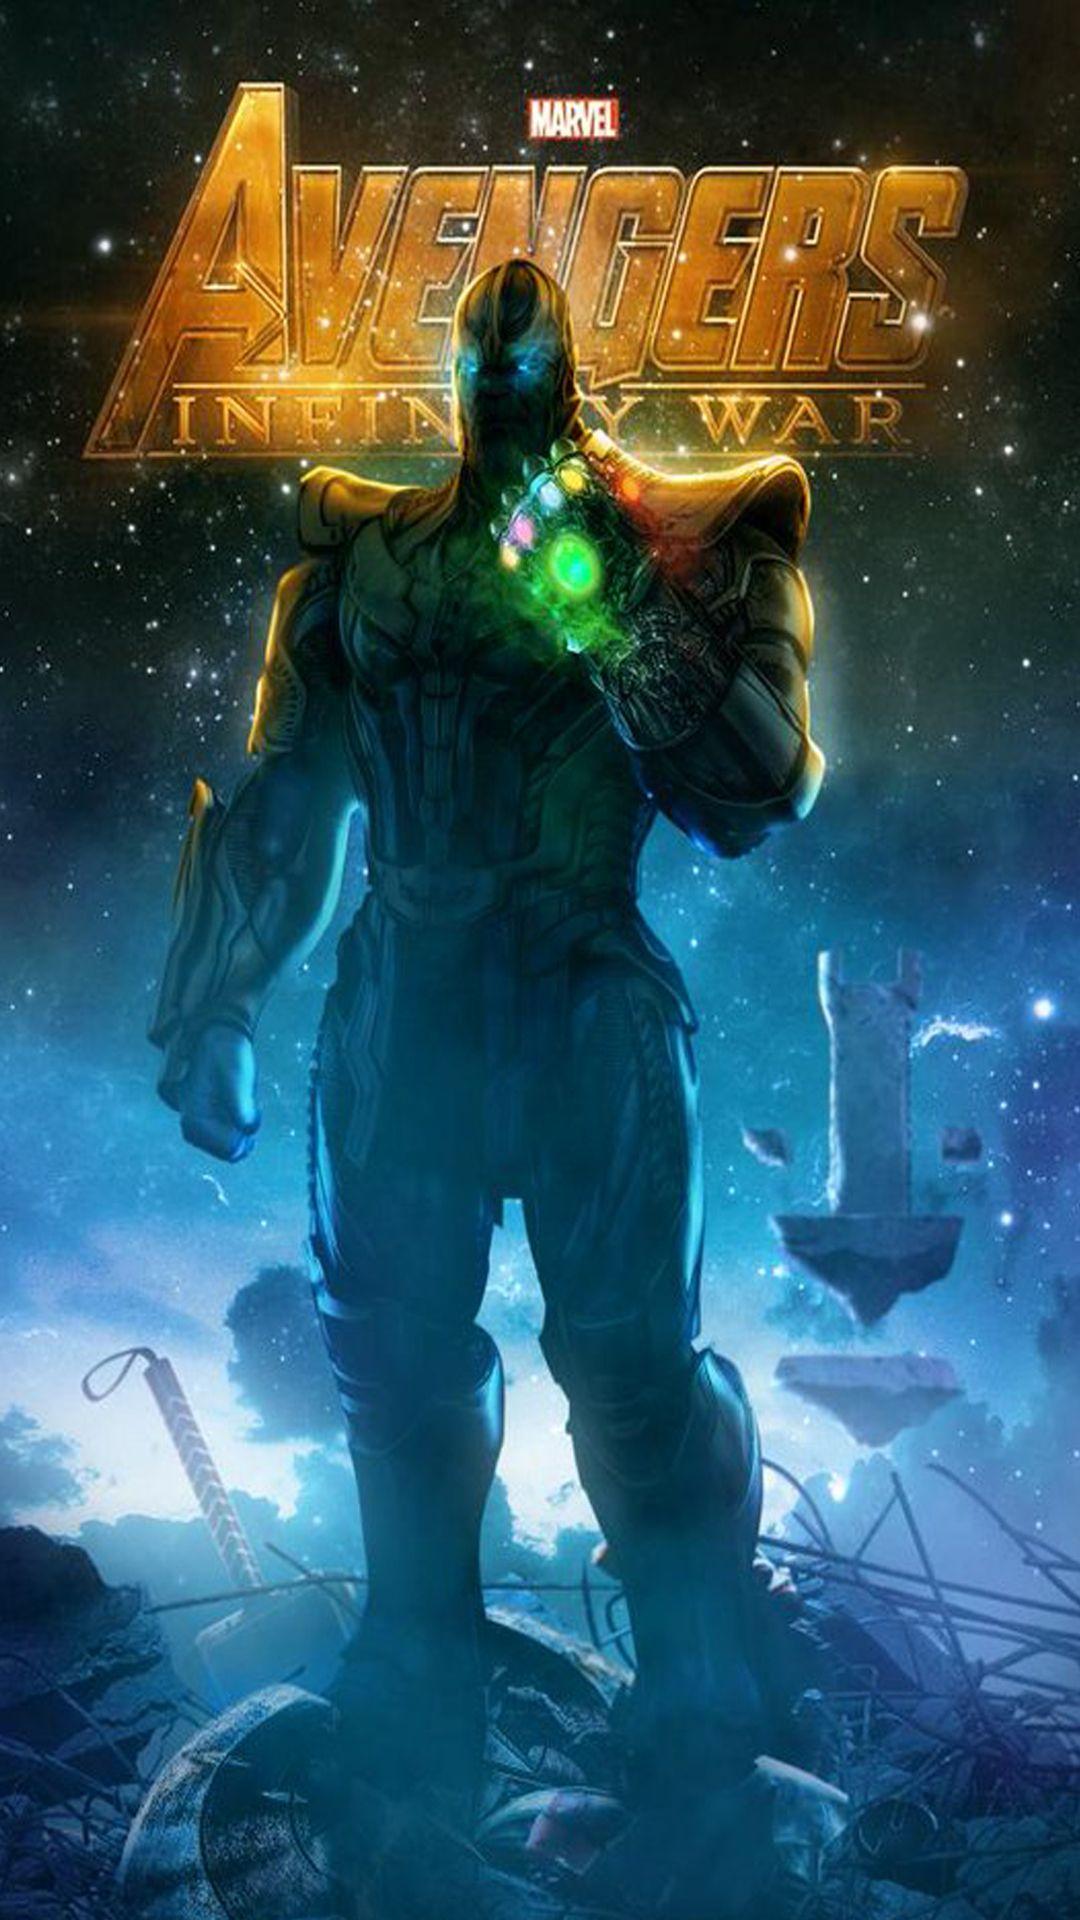 Avengers: Infinity War Wallpaper for iPhone X, 6